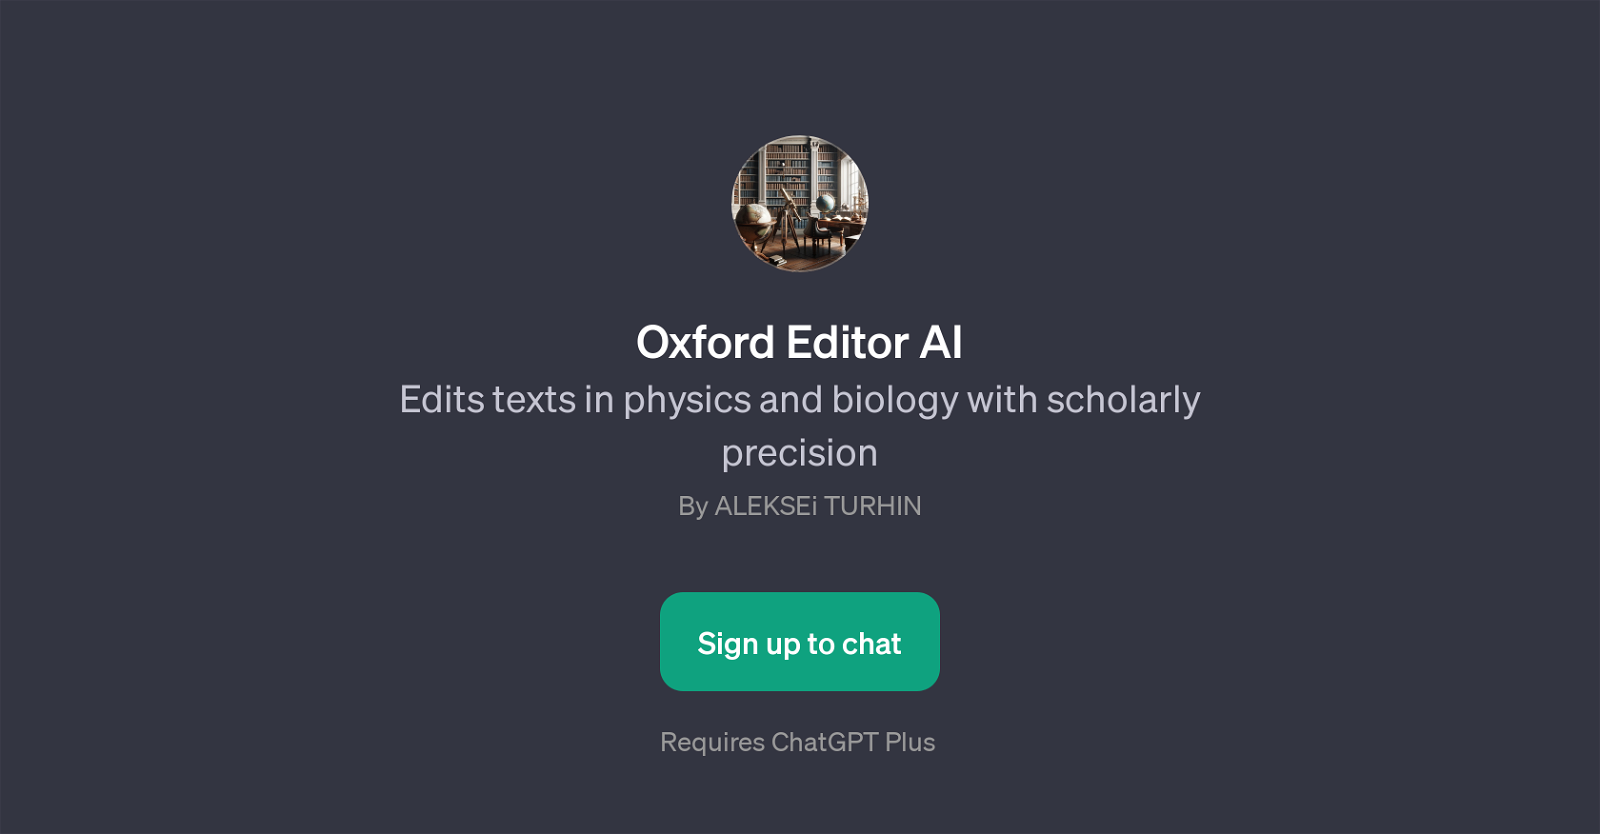 Oxford Editor AI website